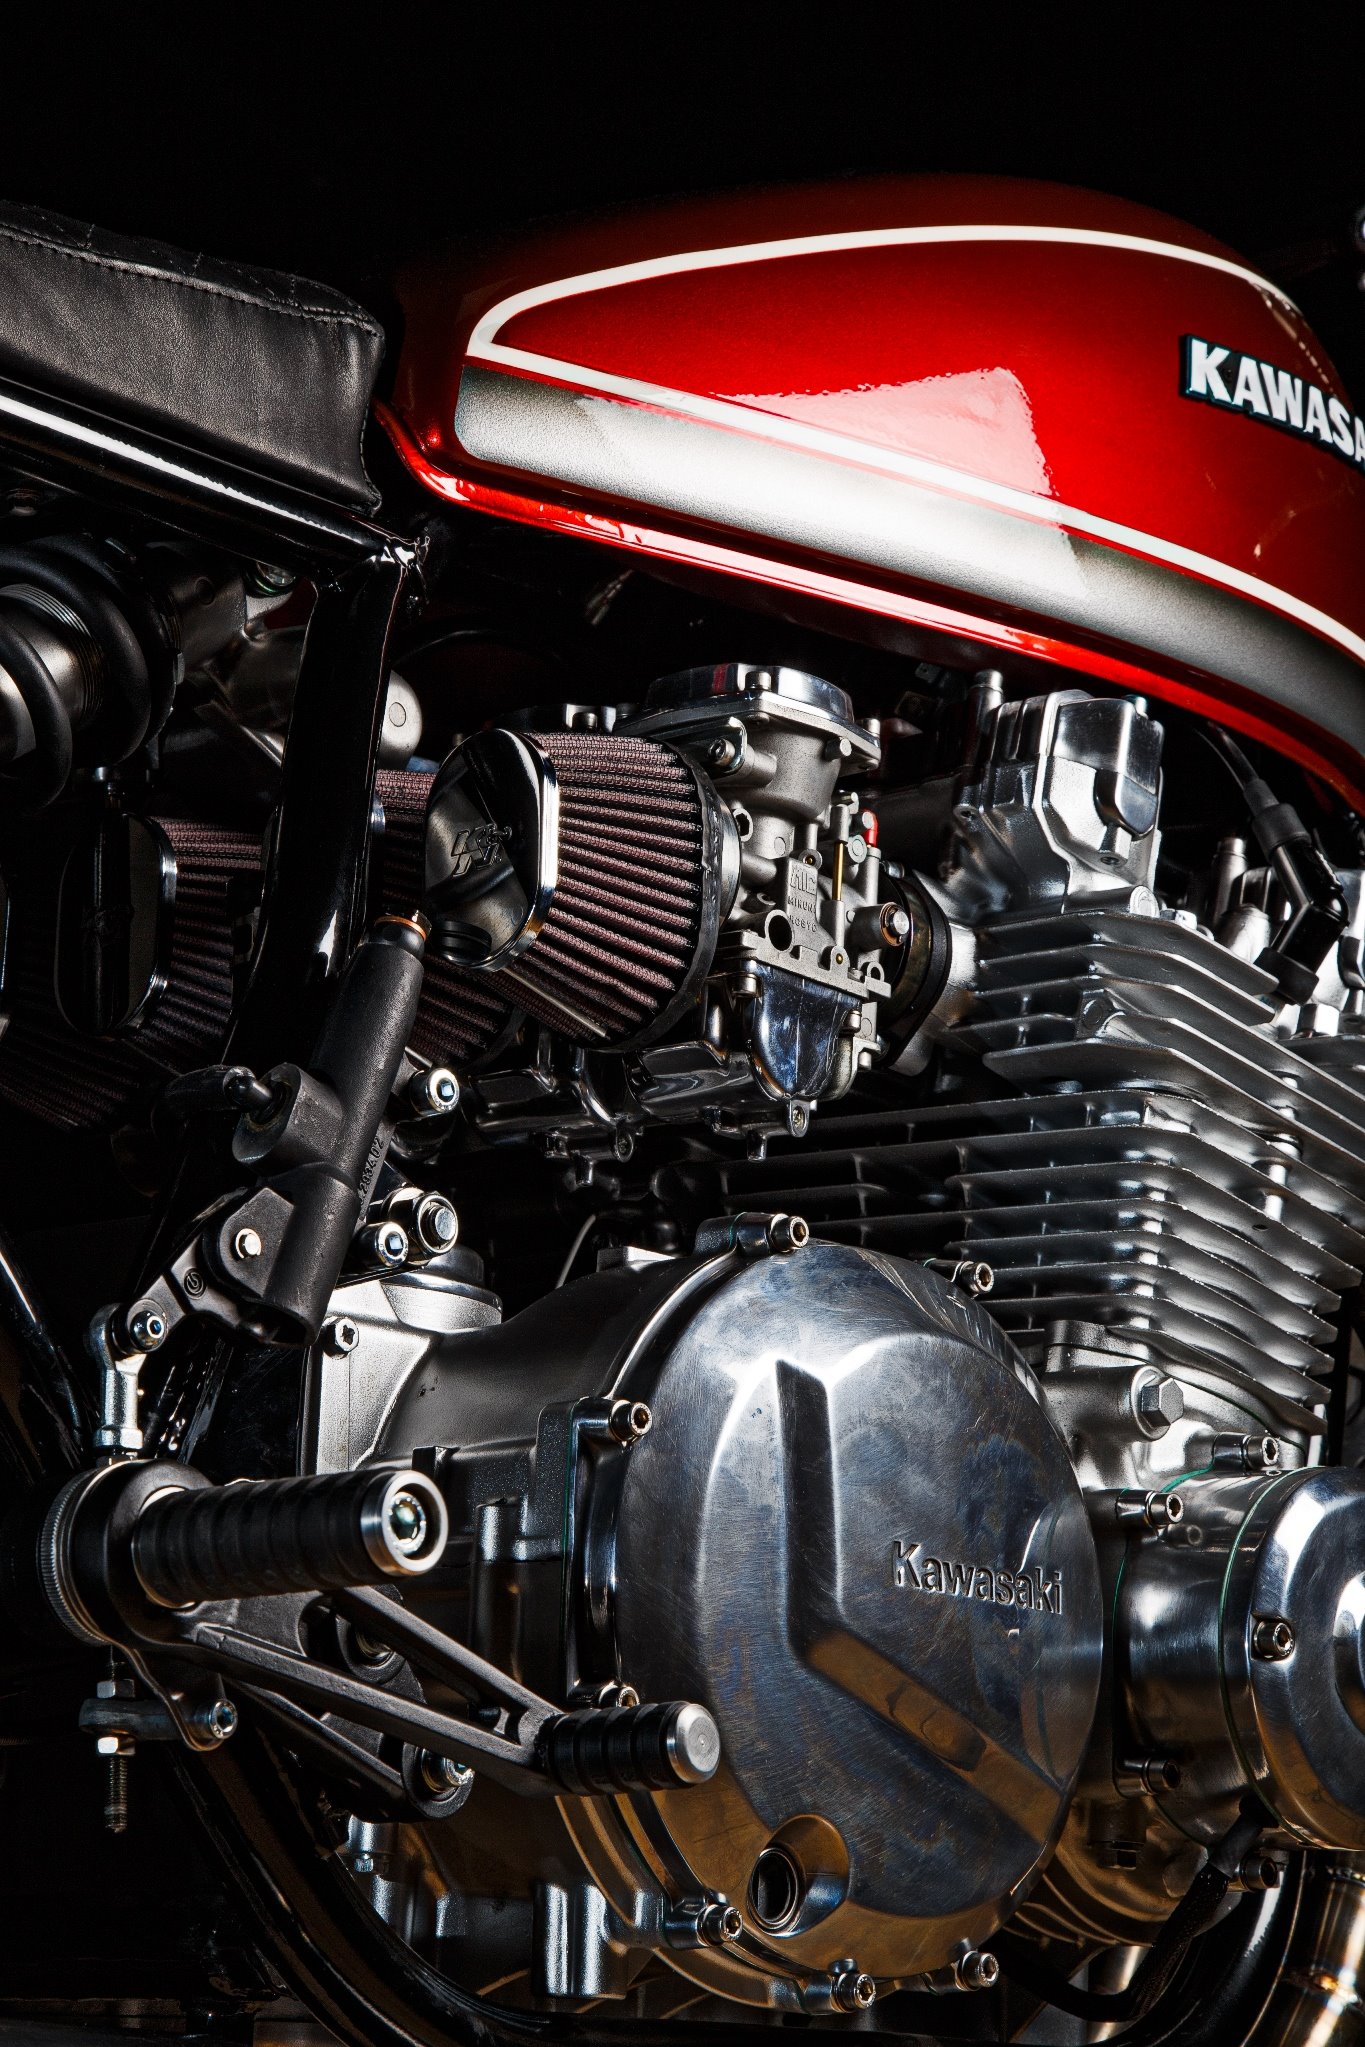 Kawasaki KZ1000 “Red Booster” from Krakenhead Customs